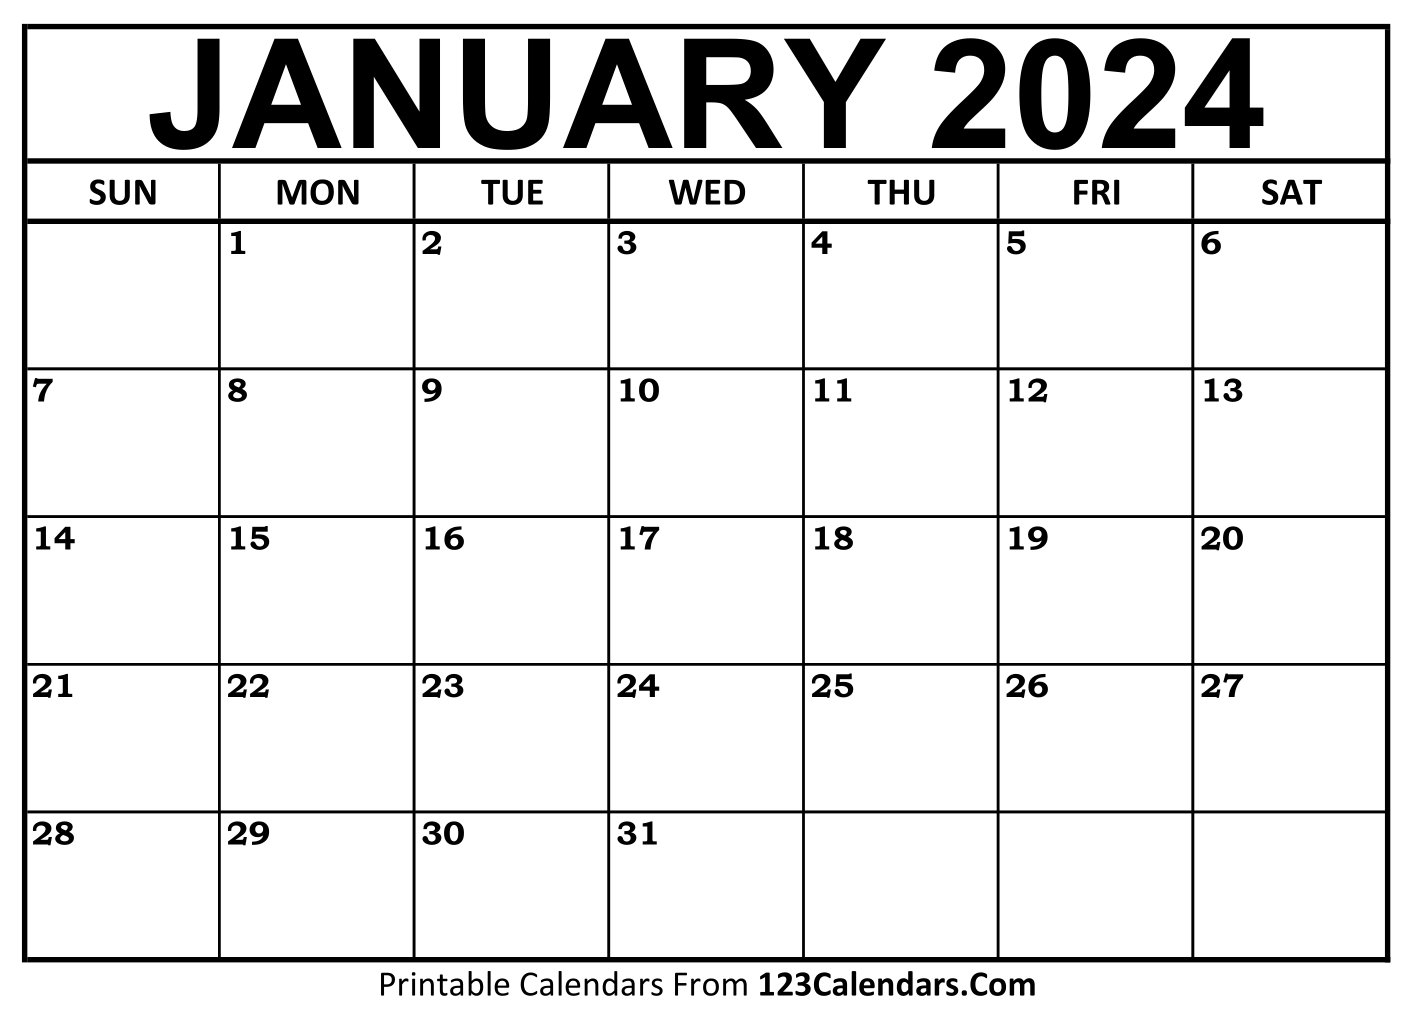 Printable January 2024 Calendar Templates - 123Calendars for Calendar January 2024 Free Printable